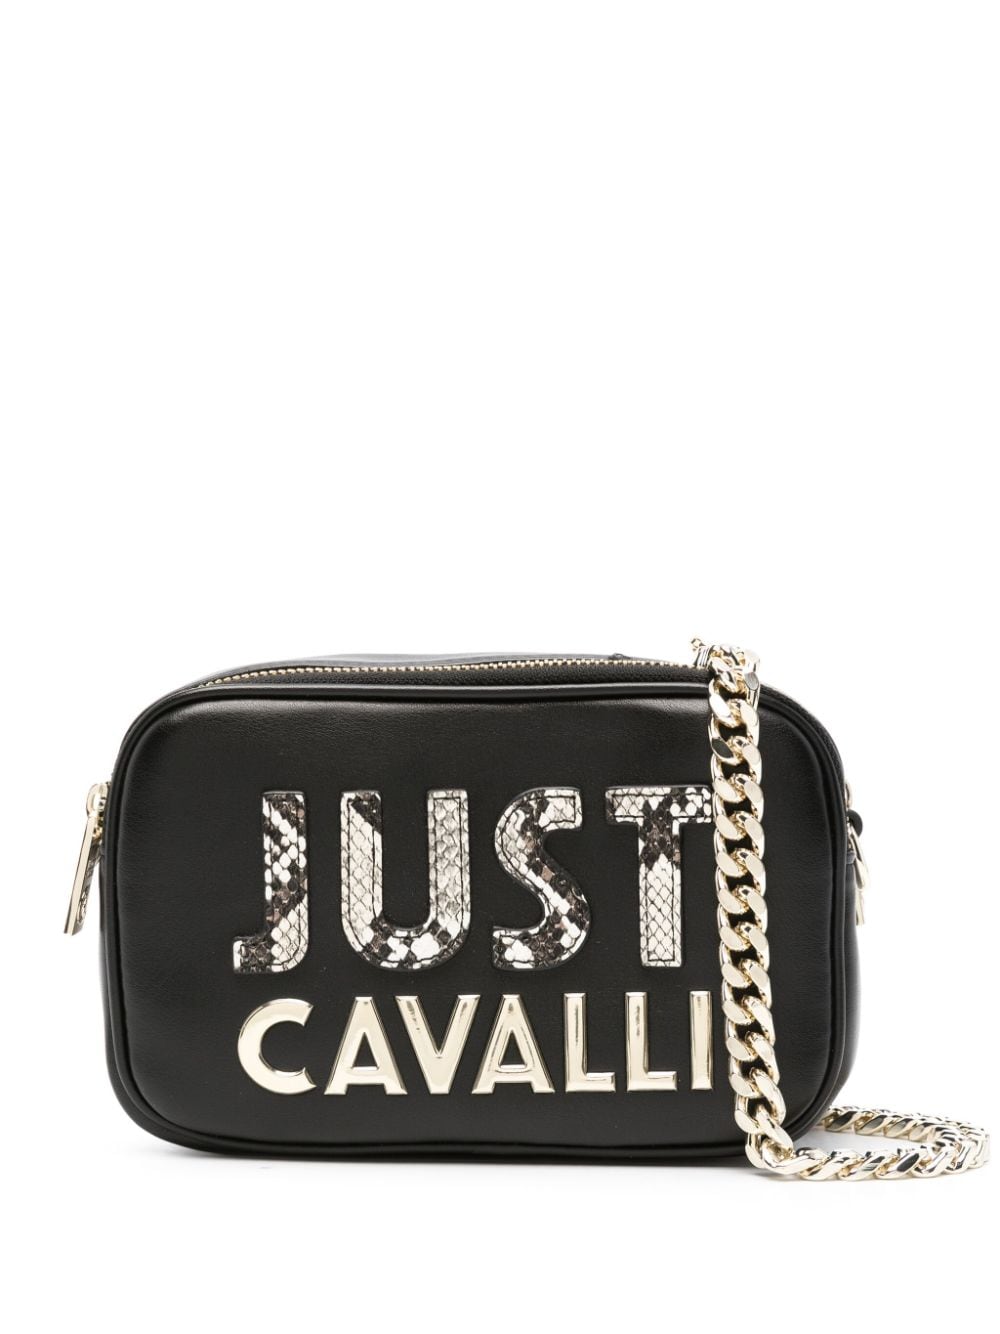 Just Cavalli logo-lettering cross body bag - Black von Just Cavalli